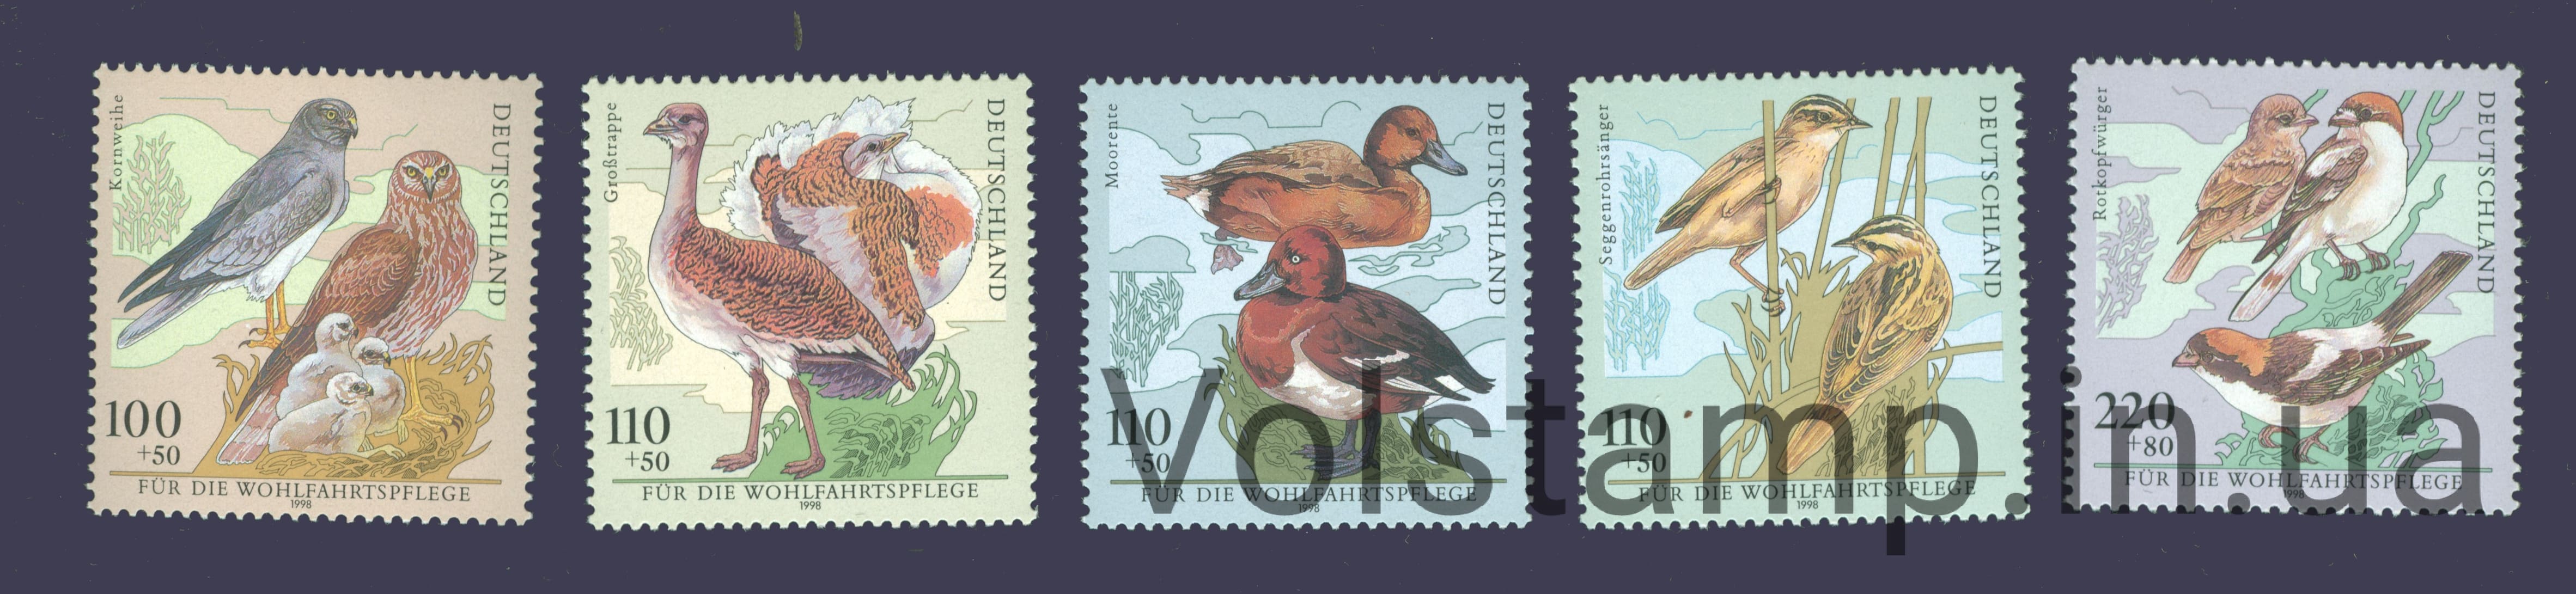 1998 Германия Серия марок (Птицы) MNH №2015-2019